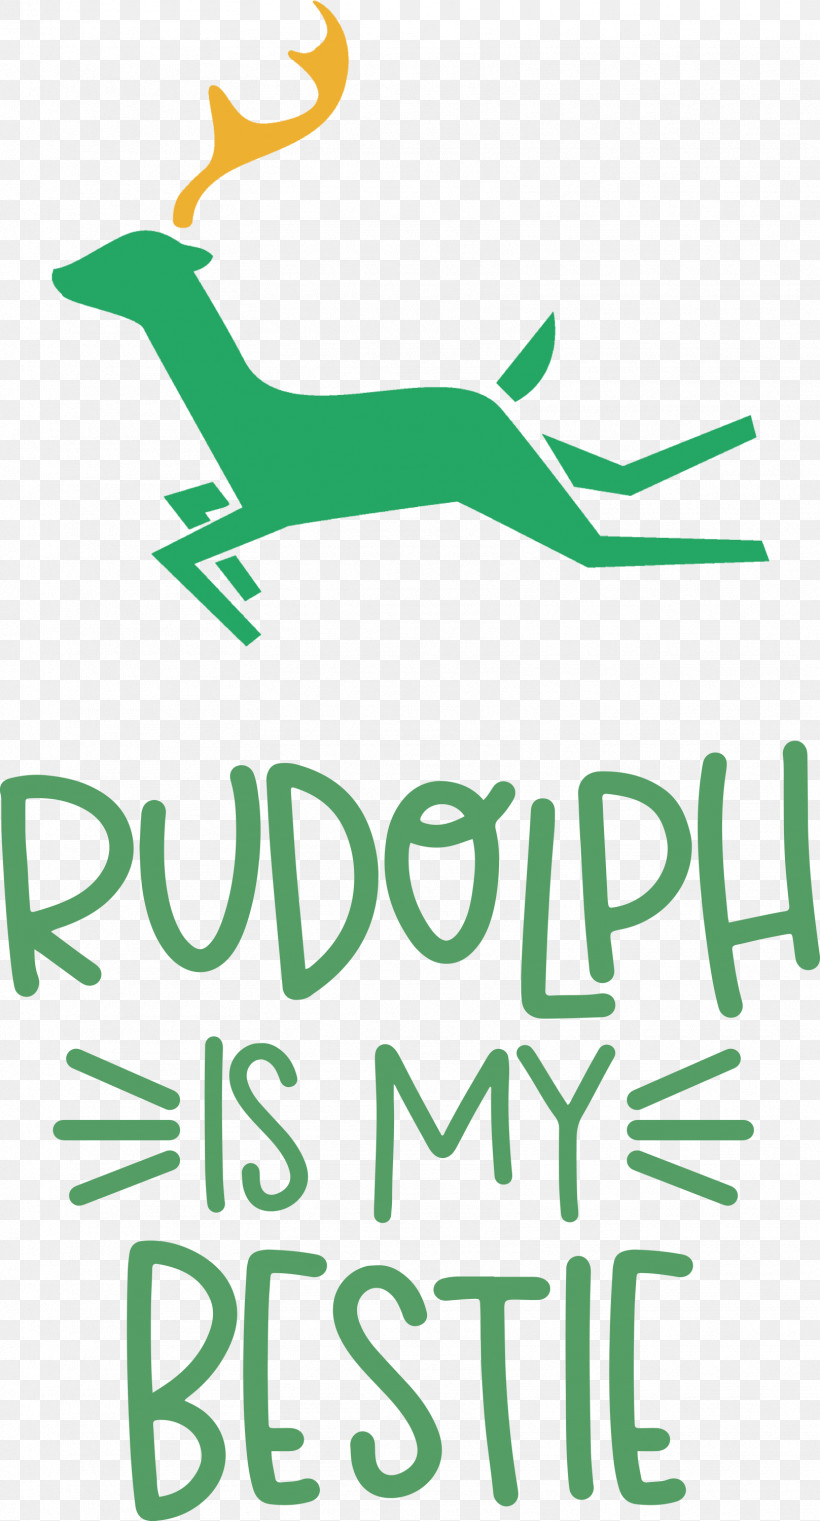 Rudolph Is My Bestie Rudolph Deer, PNG, 1617x3000px, Rudolph Is My Bestie, Christmas, Deer, Green, Happiness Download Free